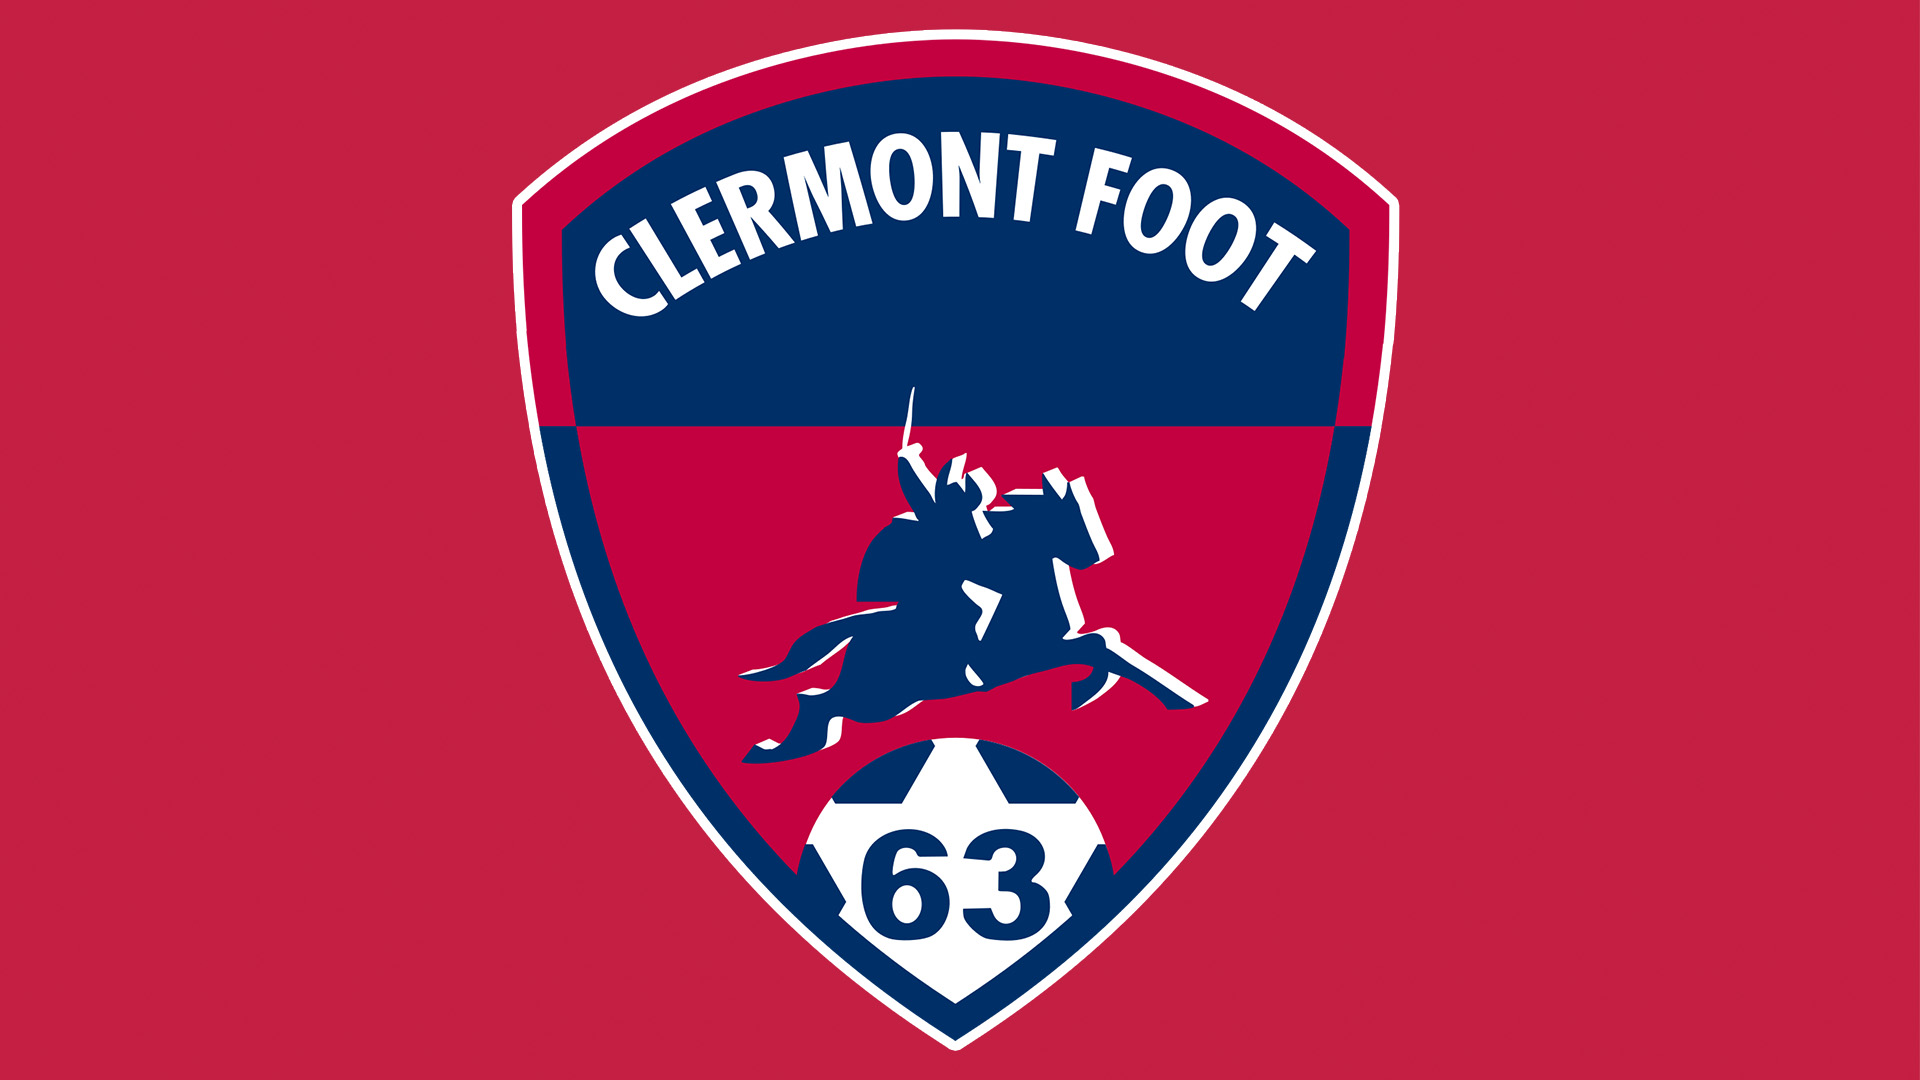 Clermont Foot 63 vs SC Bastia